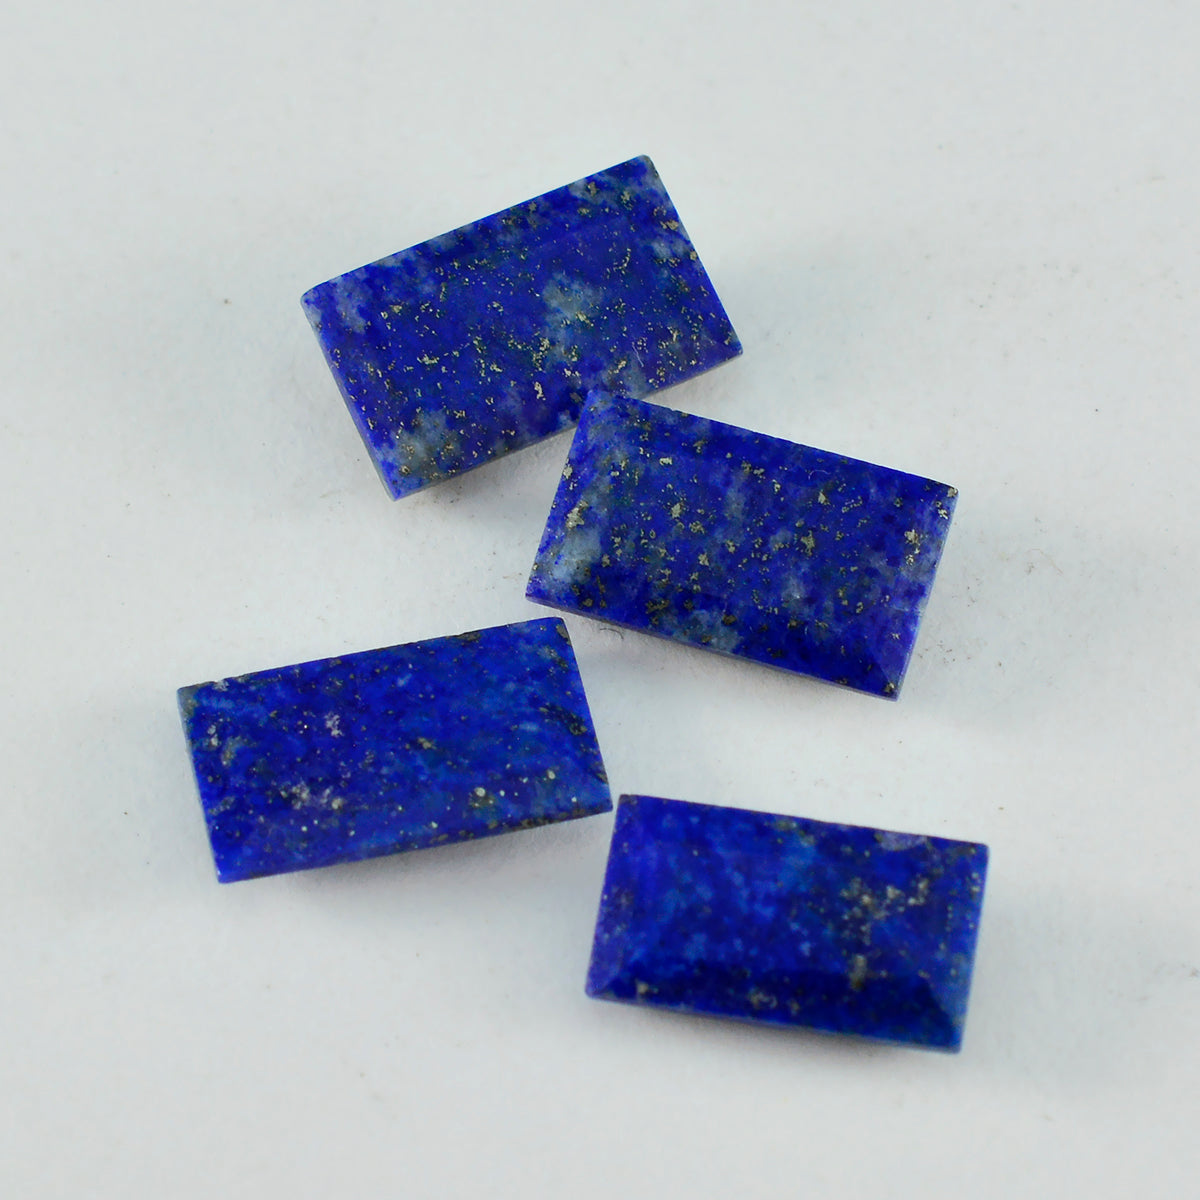 Riyogems 1PC Natuurlijke Blauwe Lapis Lazuli Facet 6x12 mm Baguette Vorm verrassende Kwaliteit Edelstenen